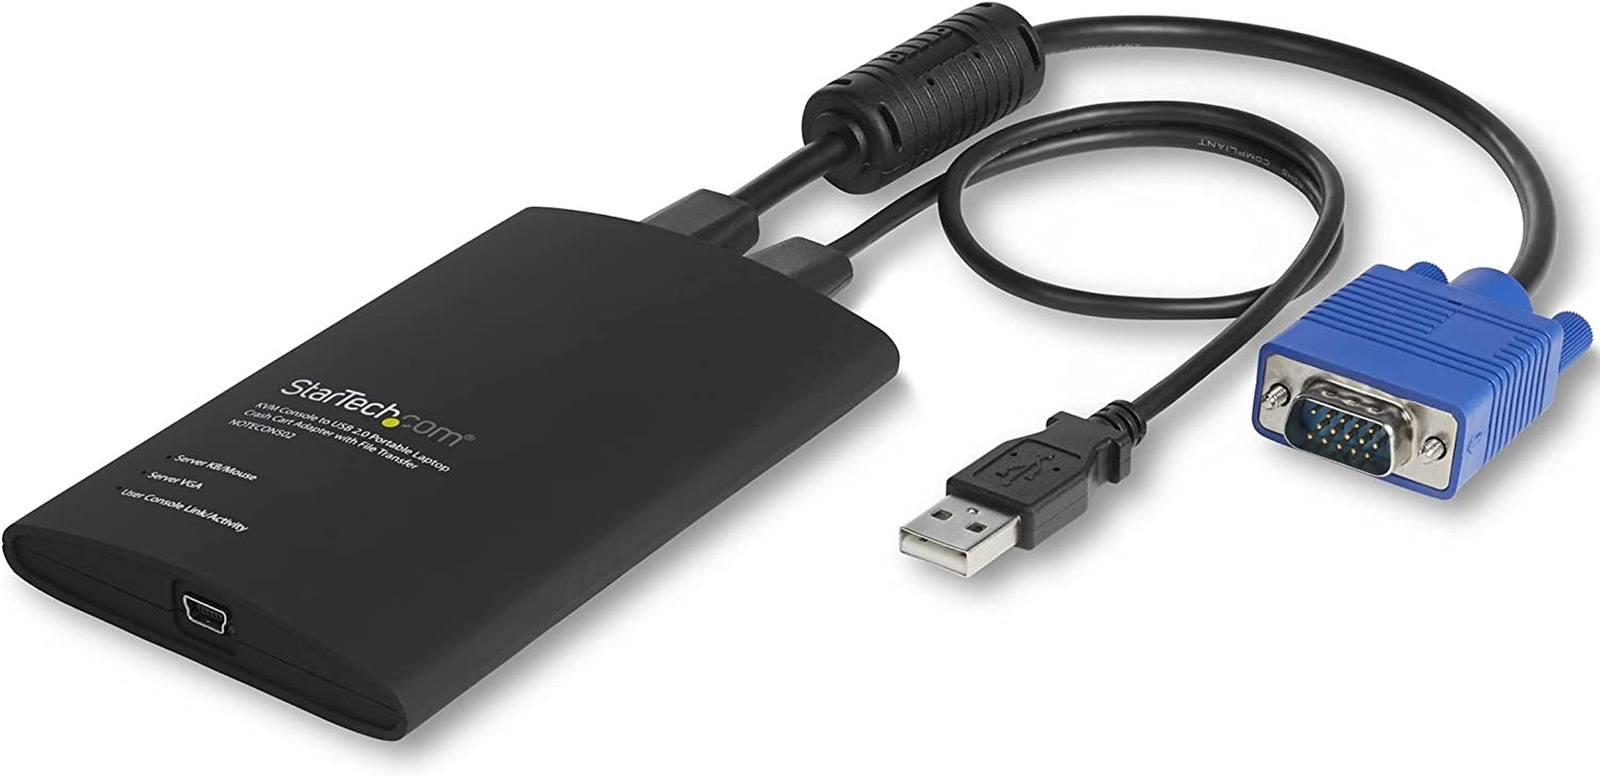 USB Crash Cart Adapter - File Transfer & Video - Portable Server Room Laptop to 